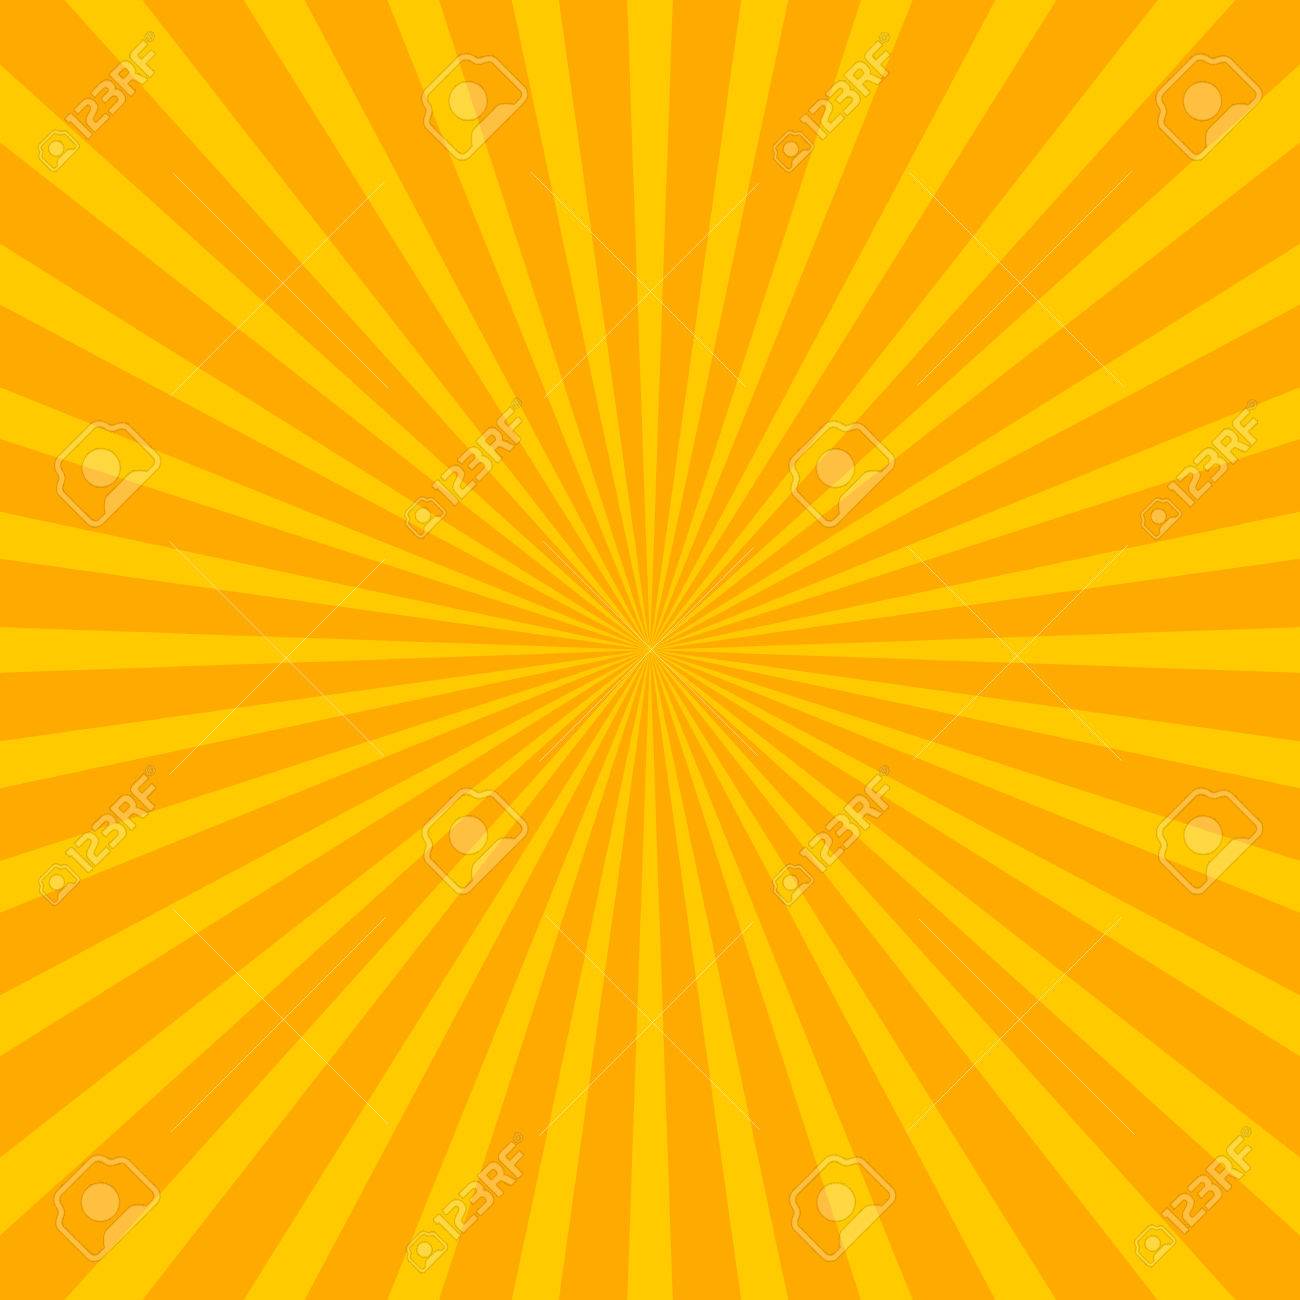 Bright Starburst Sunburst Background With Regular Radiating